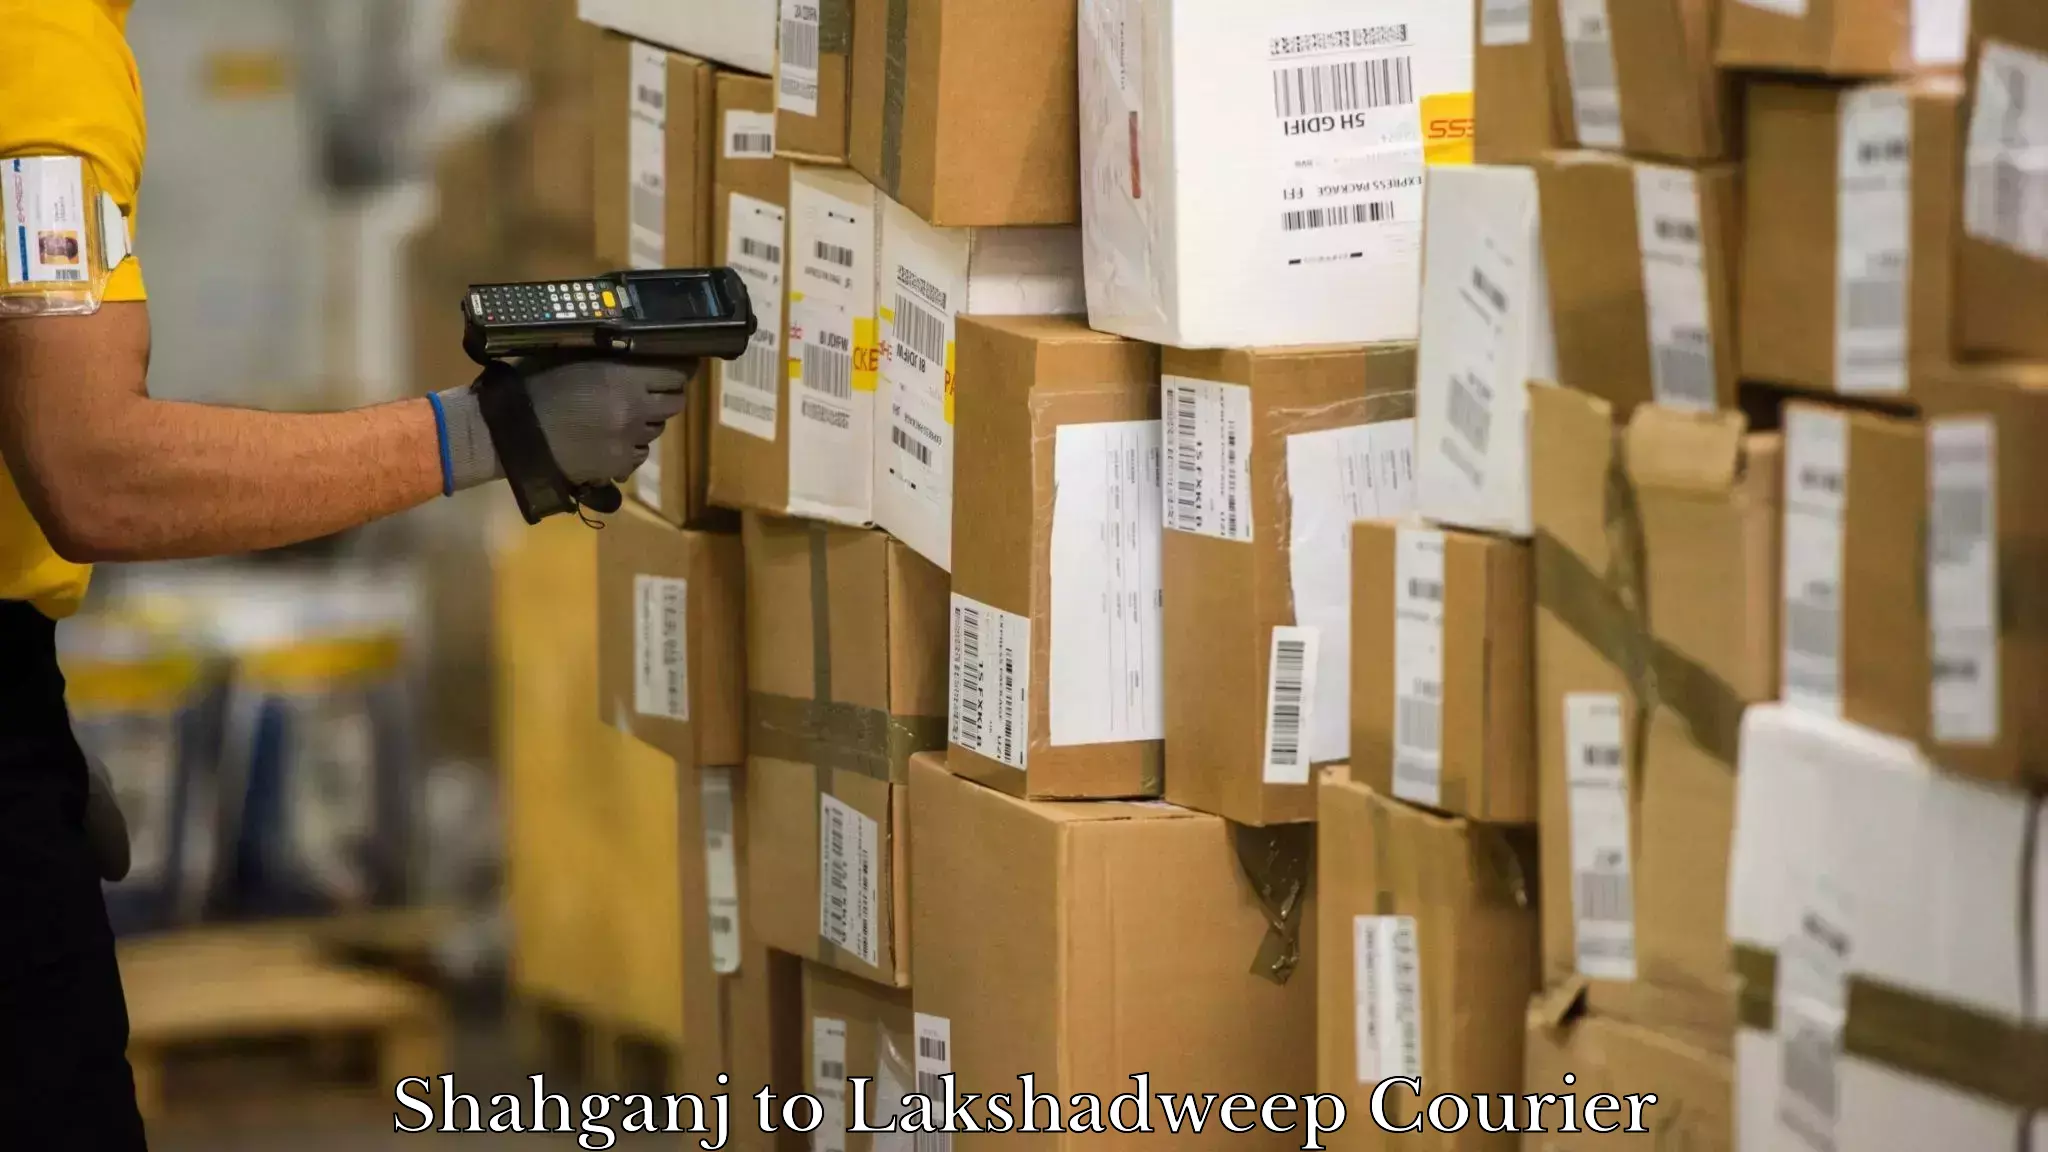 Courier service comparison Shahganj to Lakshadweep